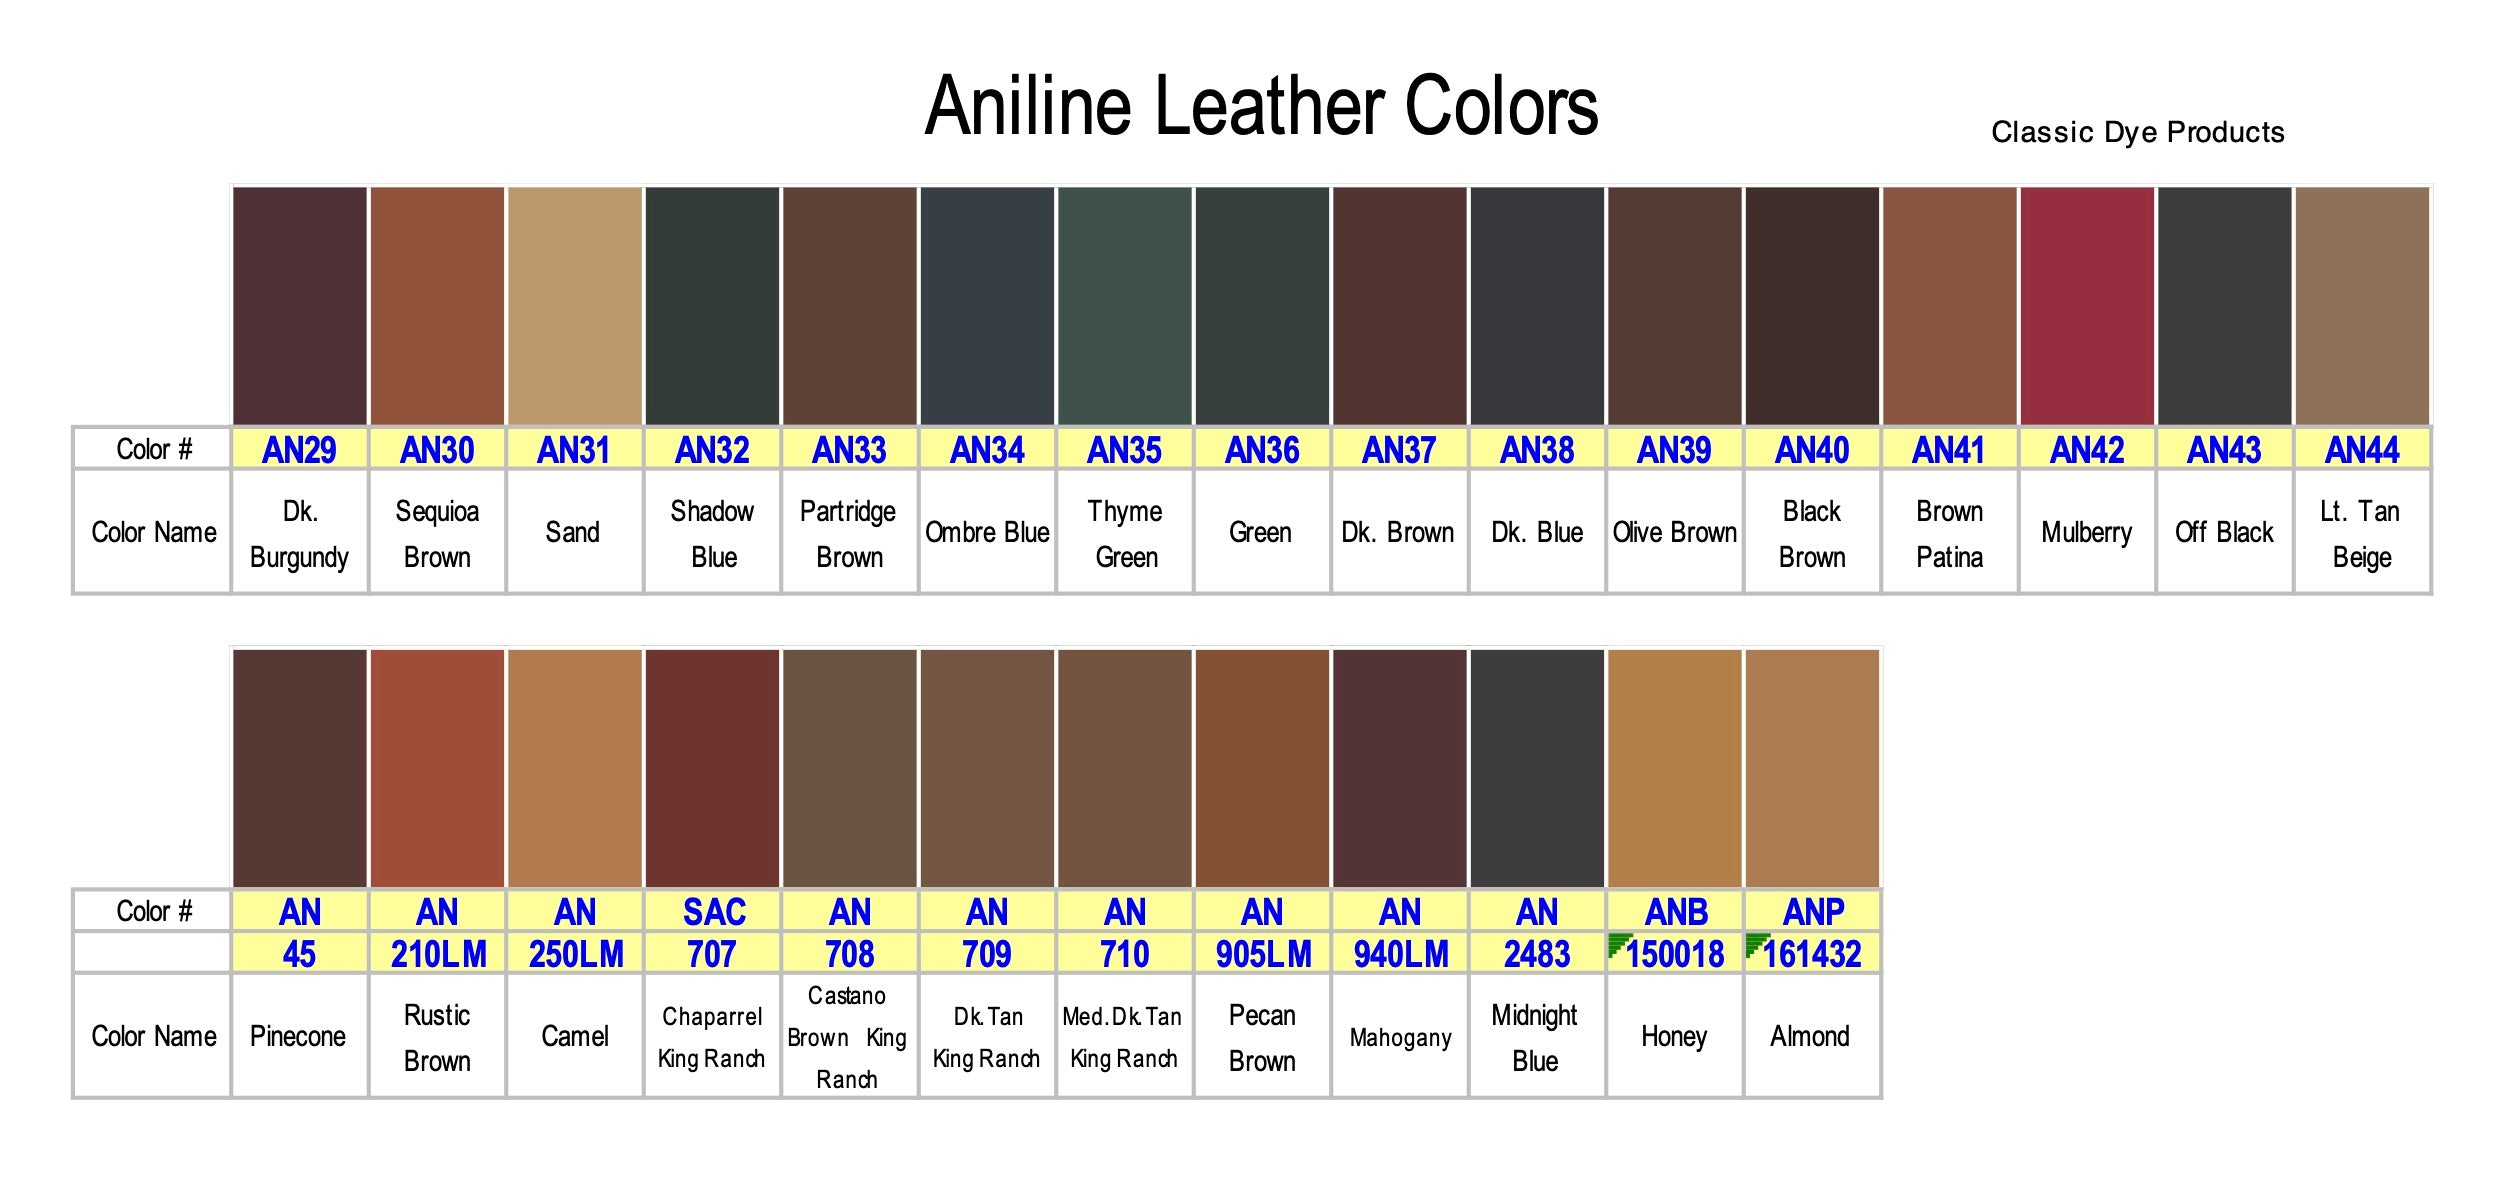 Aniline/Nubuck Leather Dye Colors